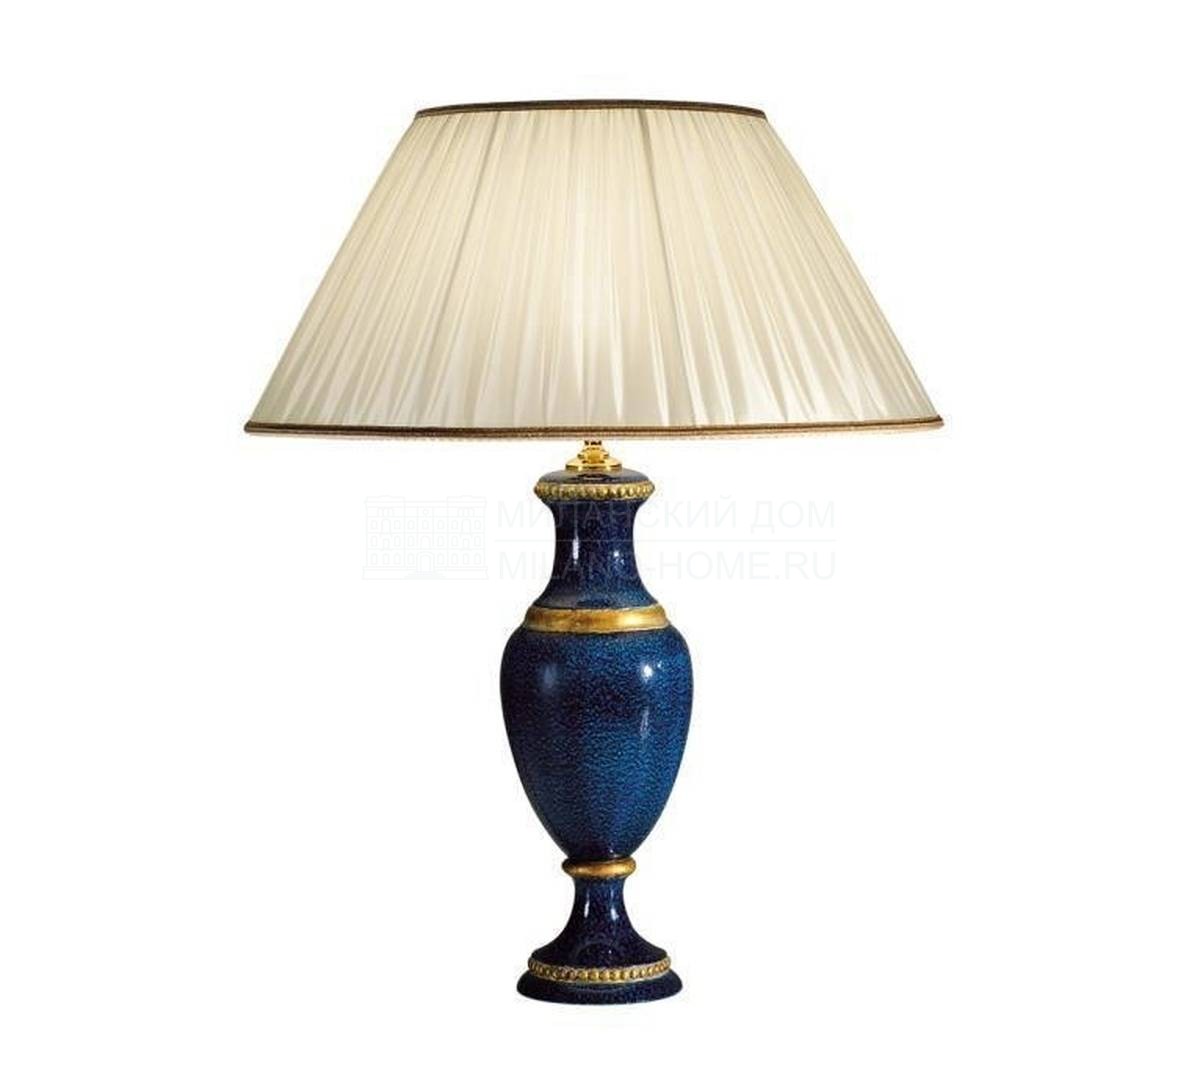 Настольная лампа Pimlico table lamp из Италии фабрики MARIONI